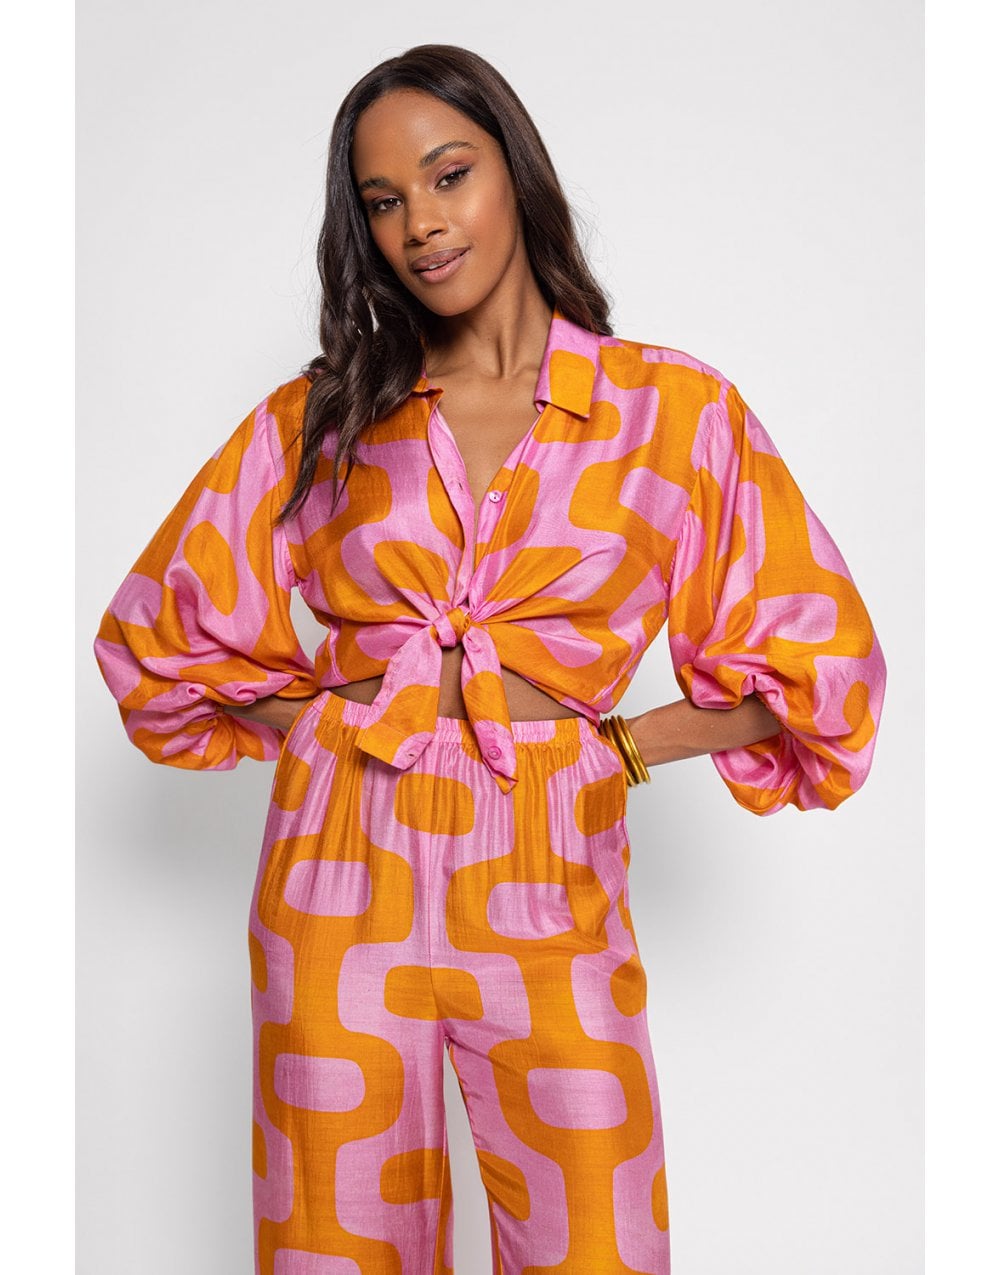 Sundress Sundress Joe Geometric Lima Print Shirt Size: M/l, Col: Pink/orange